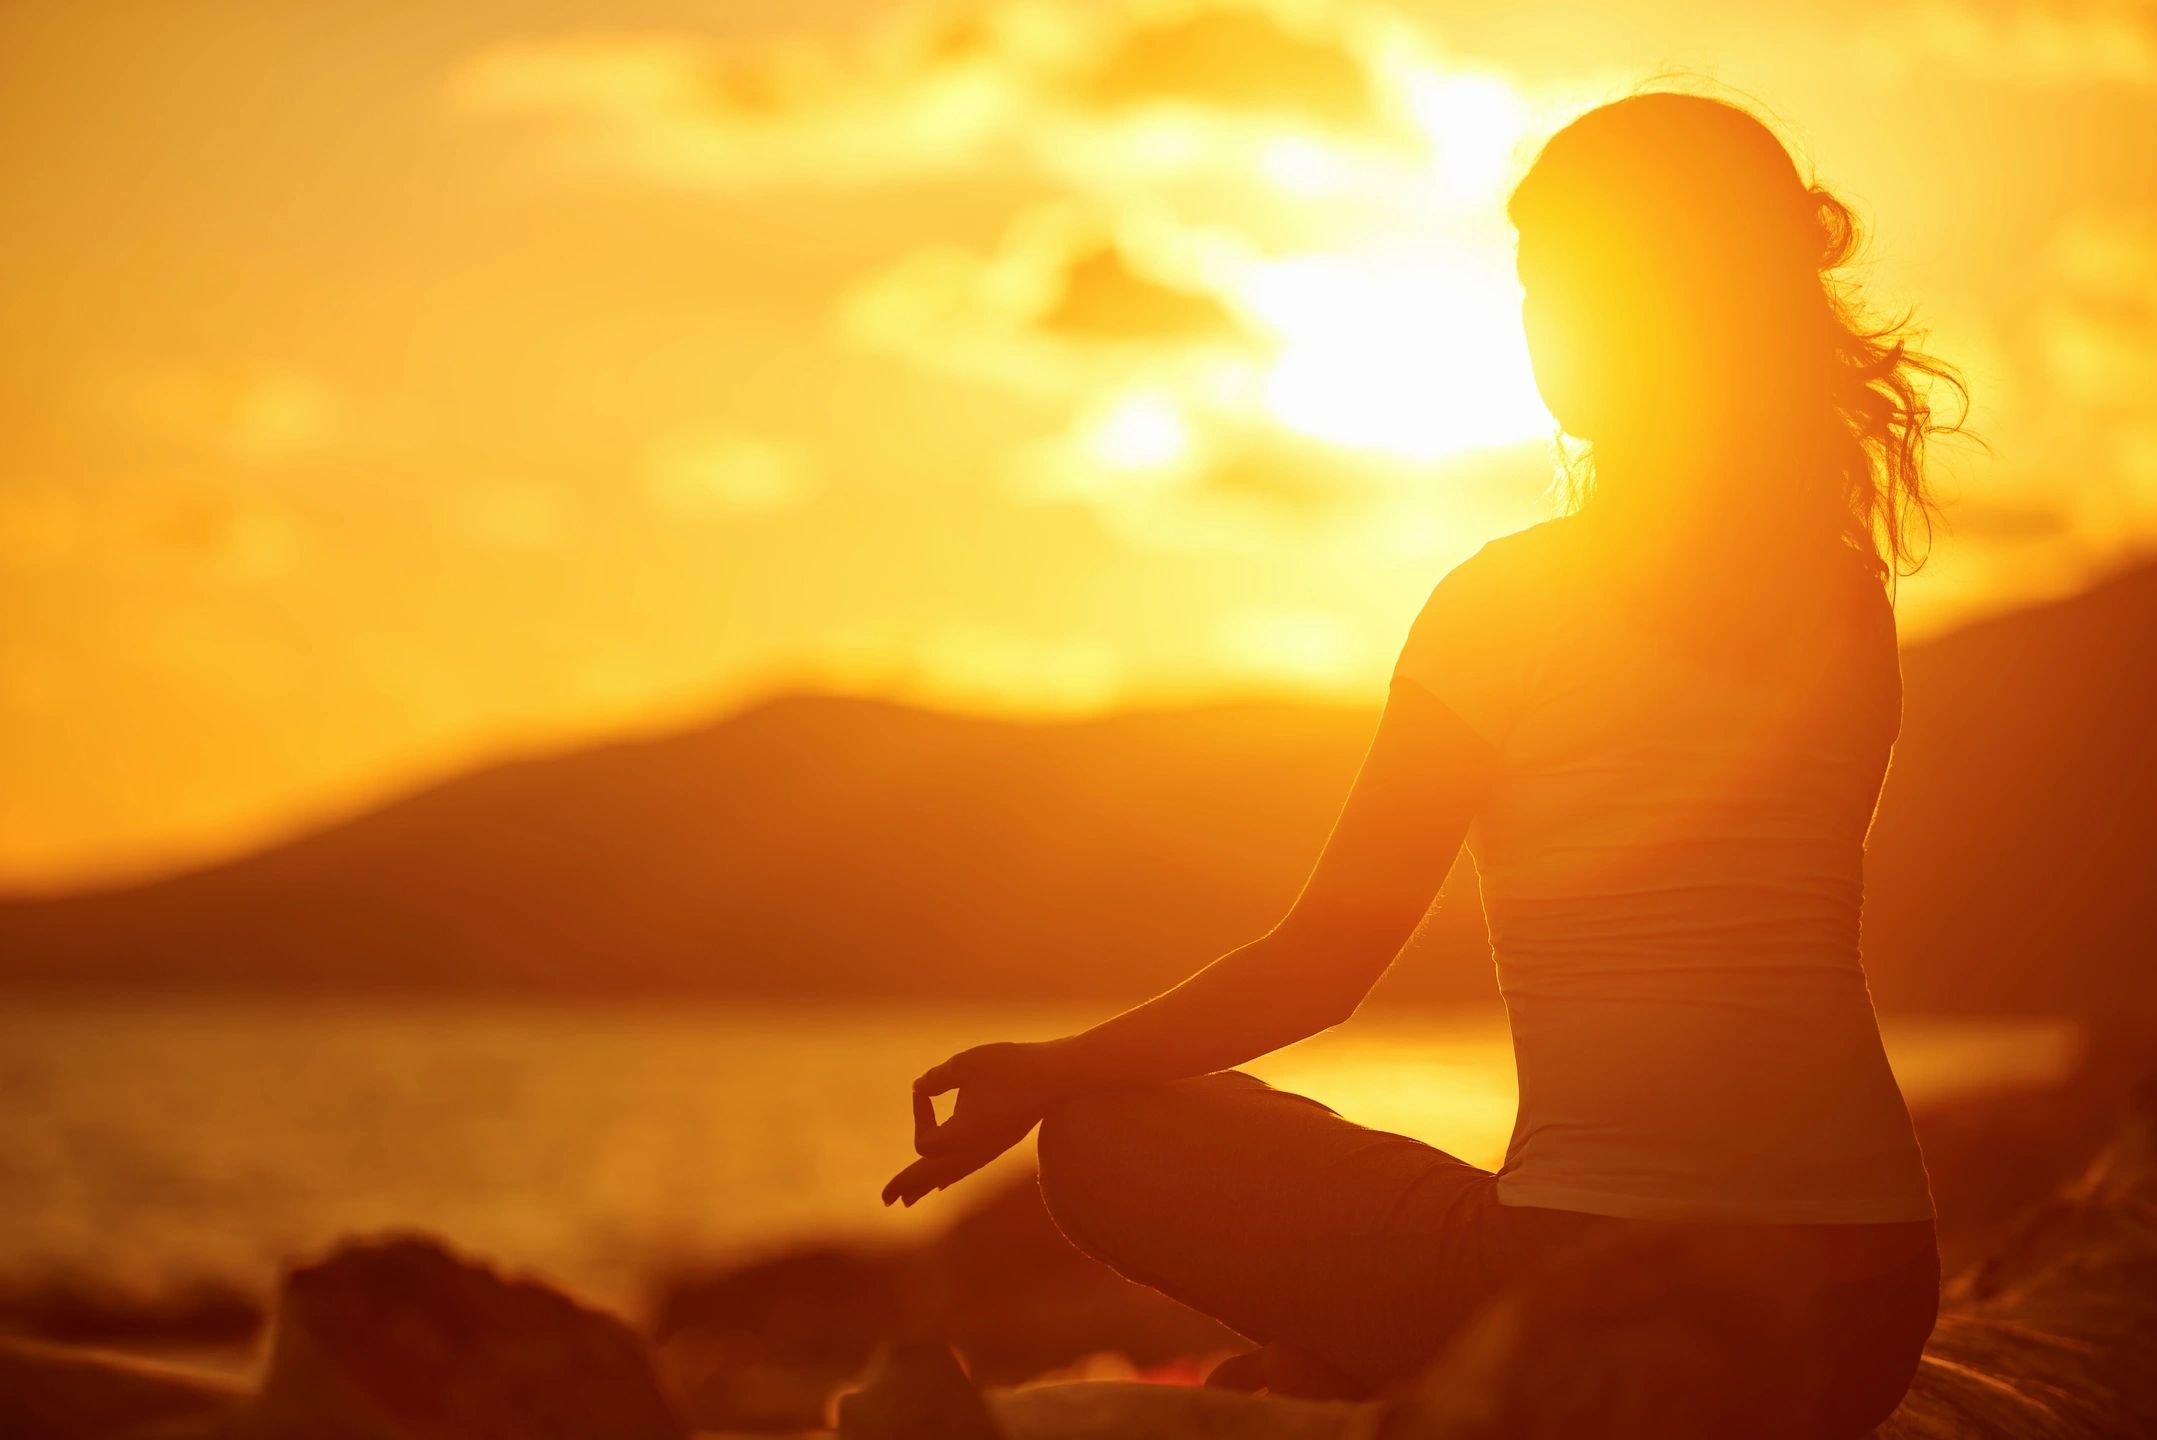 Kauai Yoga - Find Peace and Balance with Yin Yoga Classes